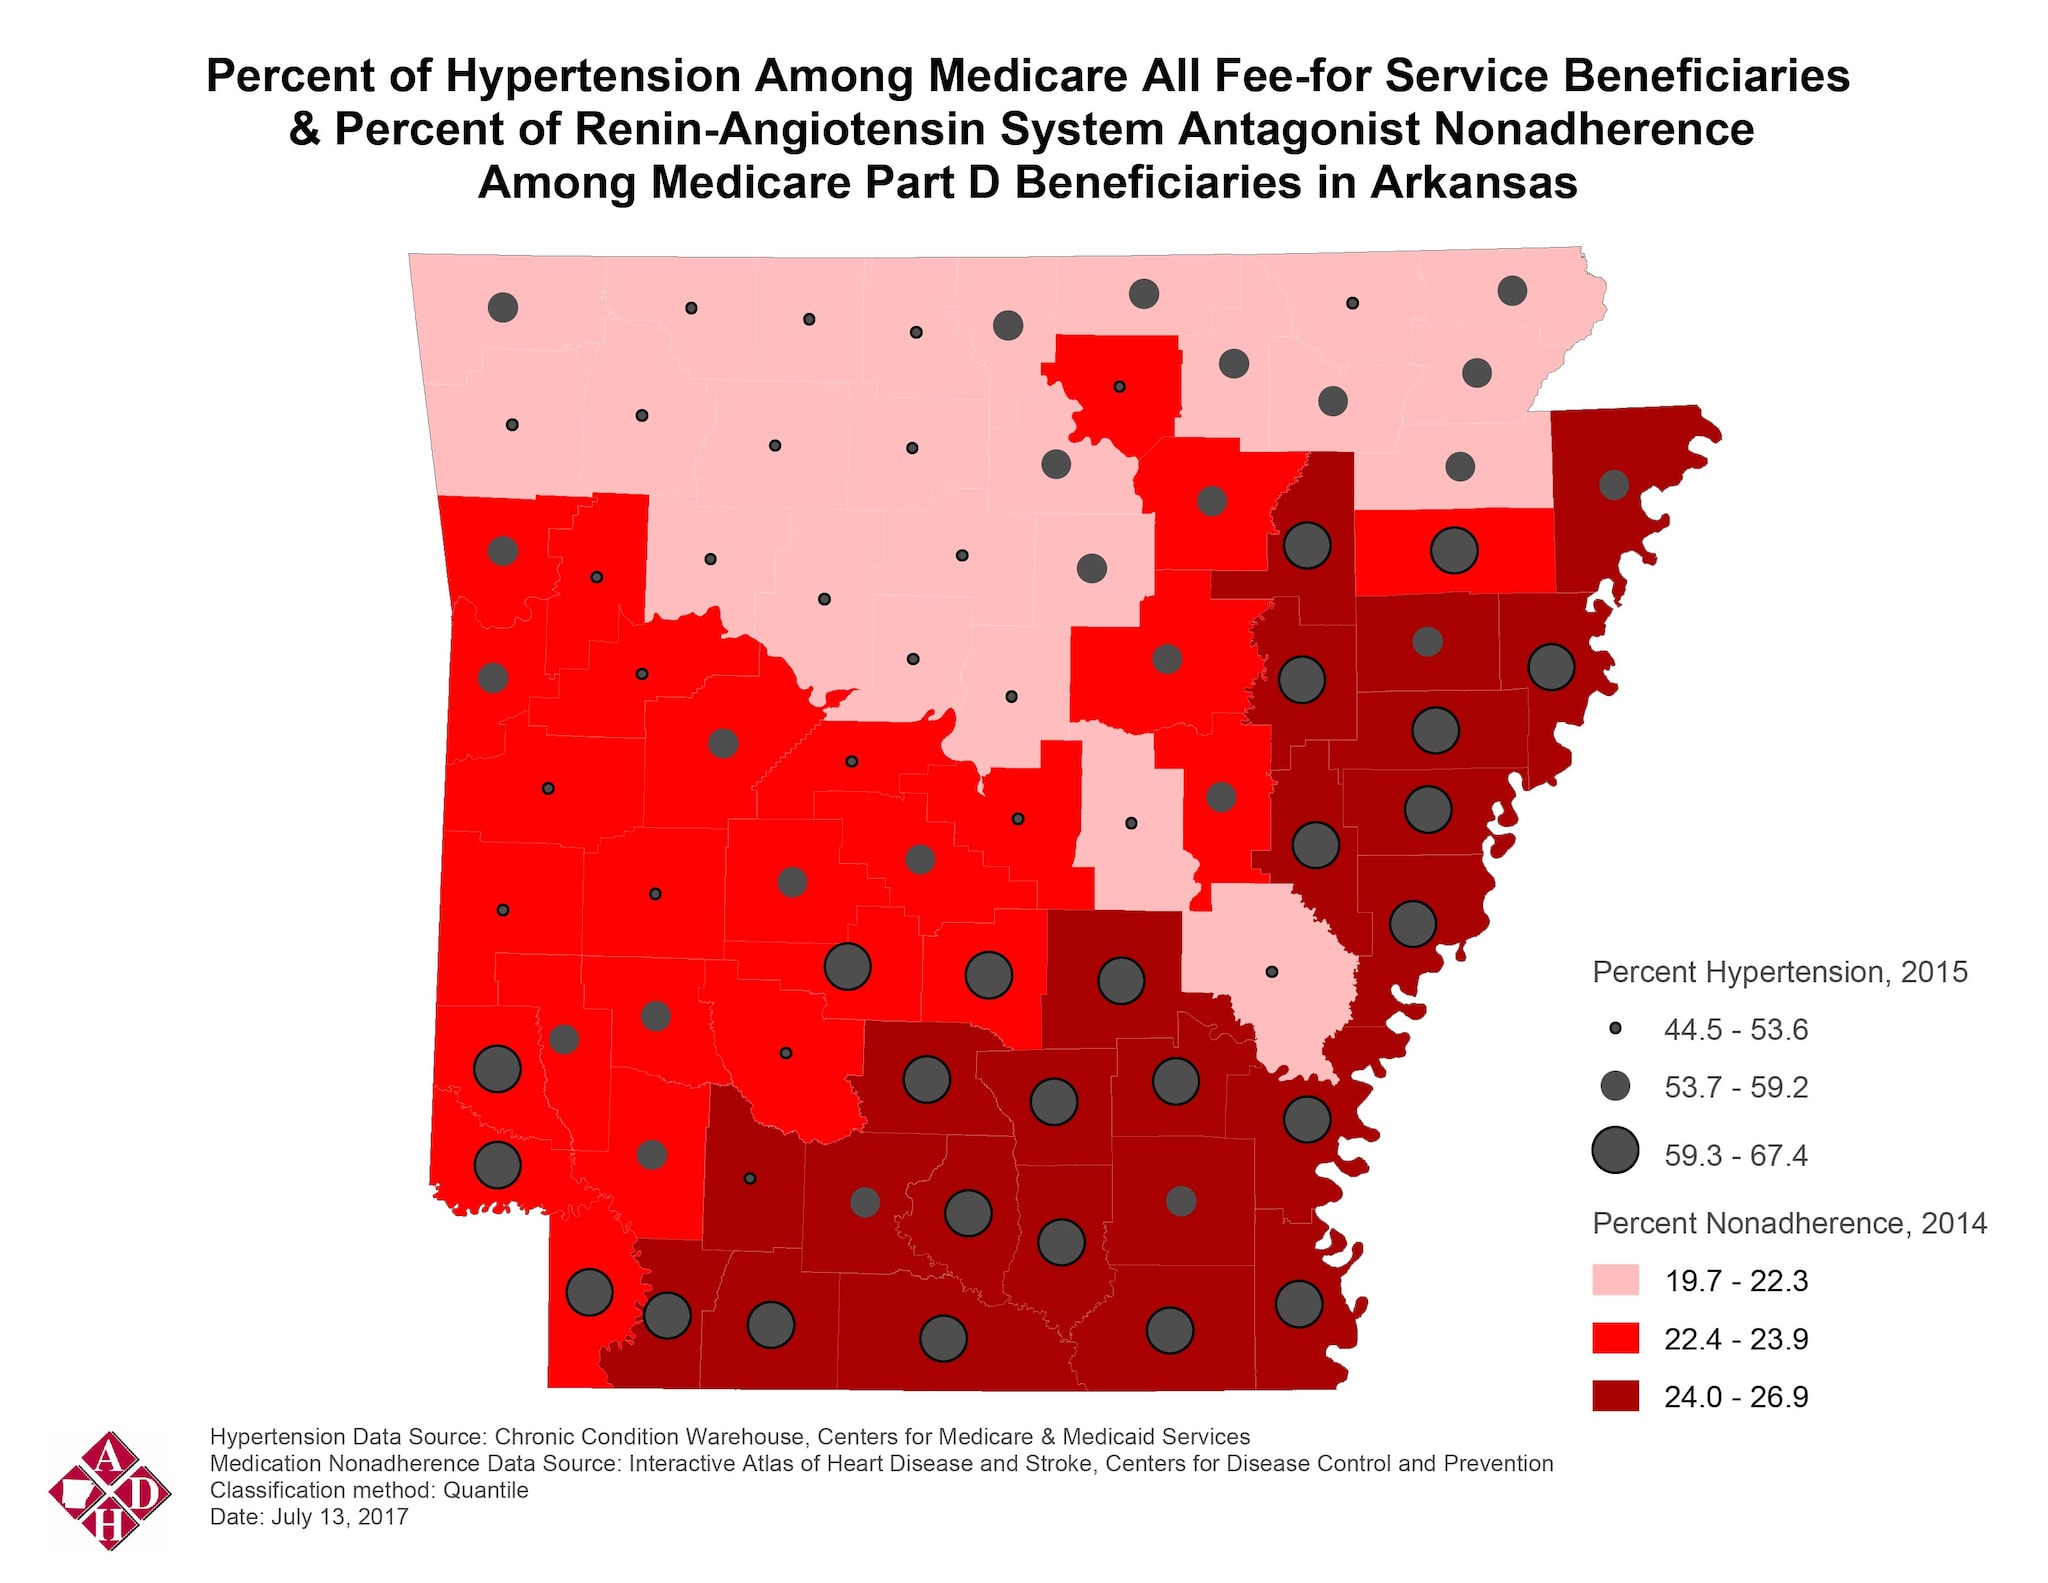 Hypertension and RASA Nonadherence in Arkansas